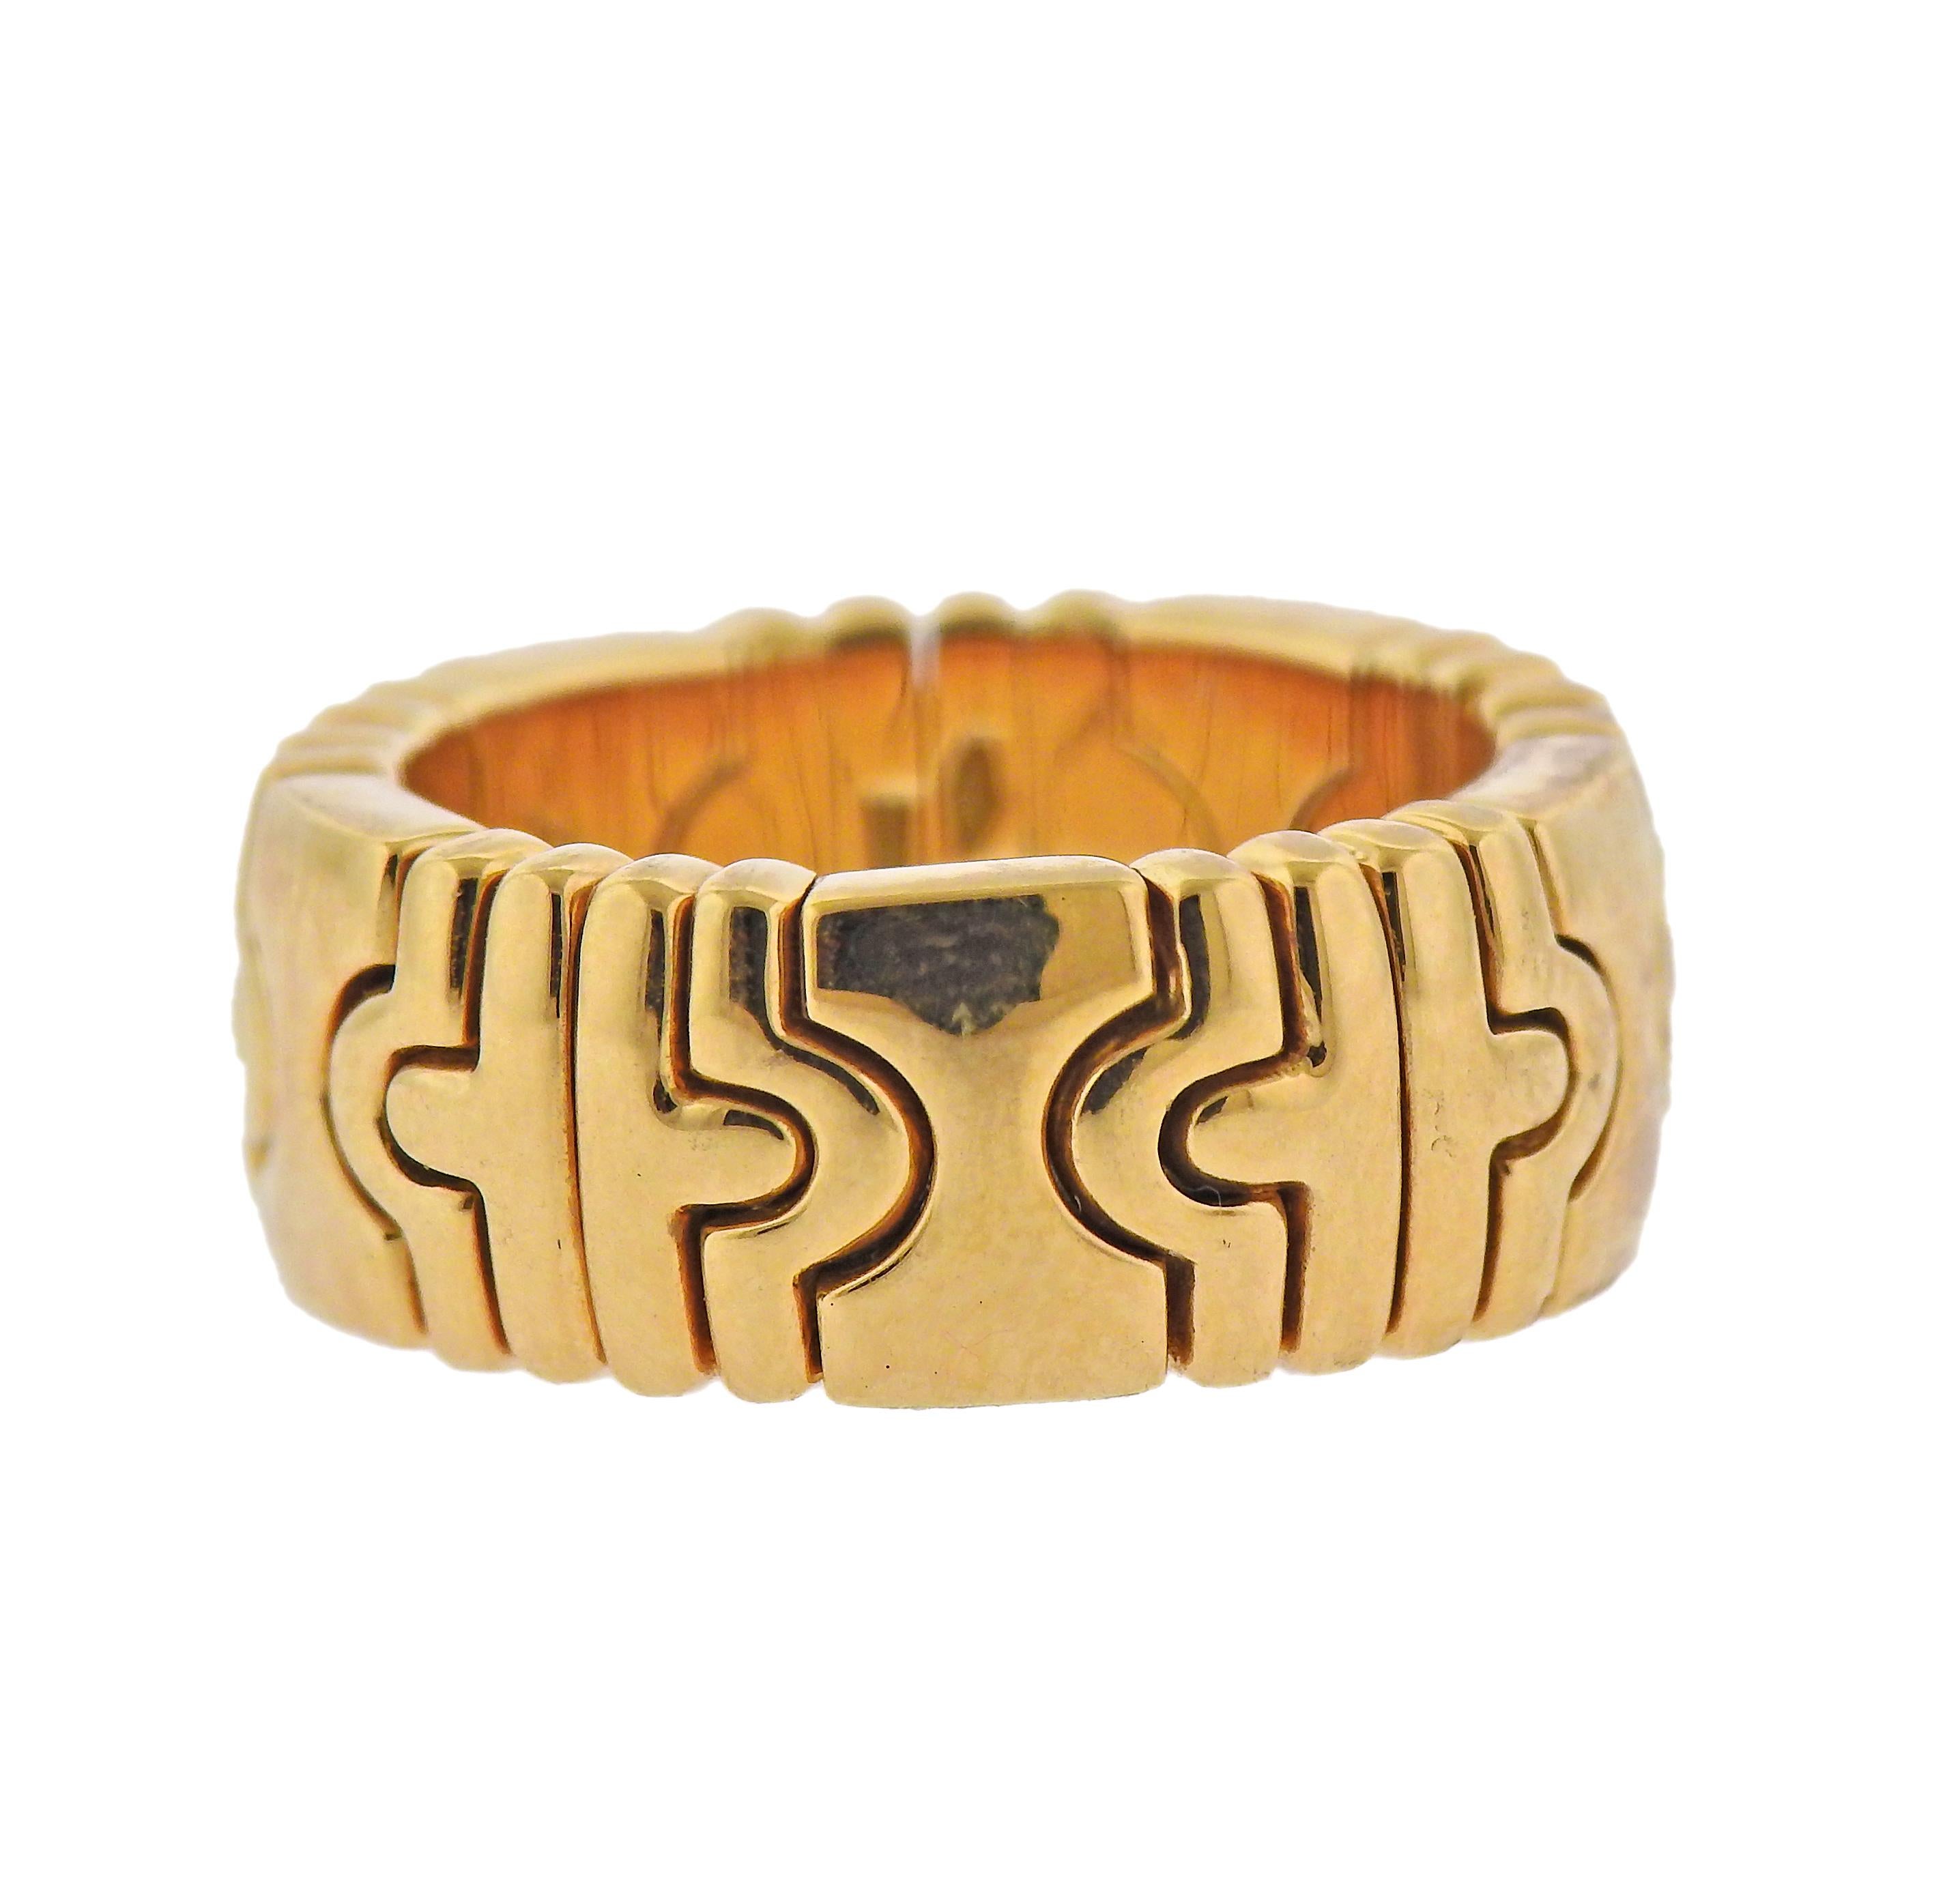 18k yellow gold Parentesi band ring by Bvlgari. Ring size - 5.25, ring is 8mm wide. Marked: Bvlgari, 750, Italian mark. Weight - 15 grams. 